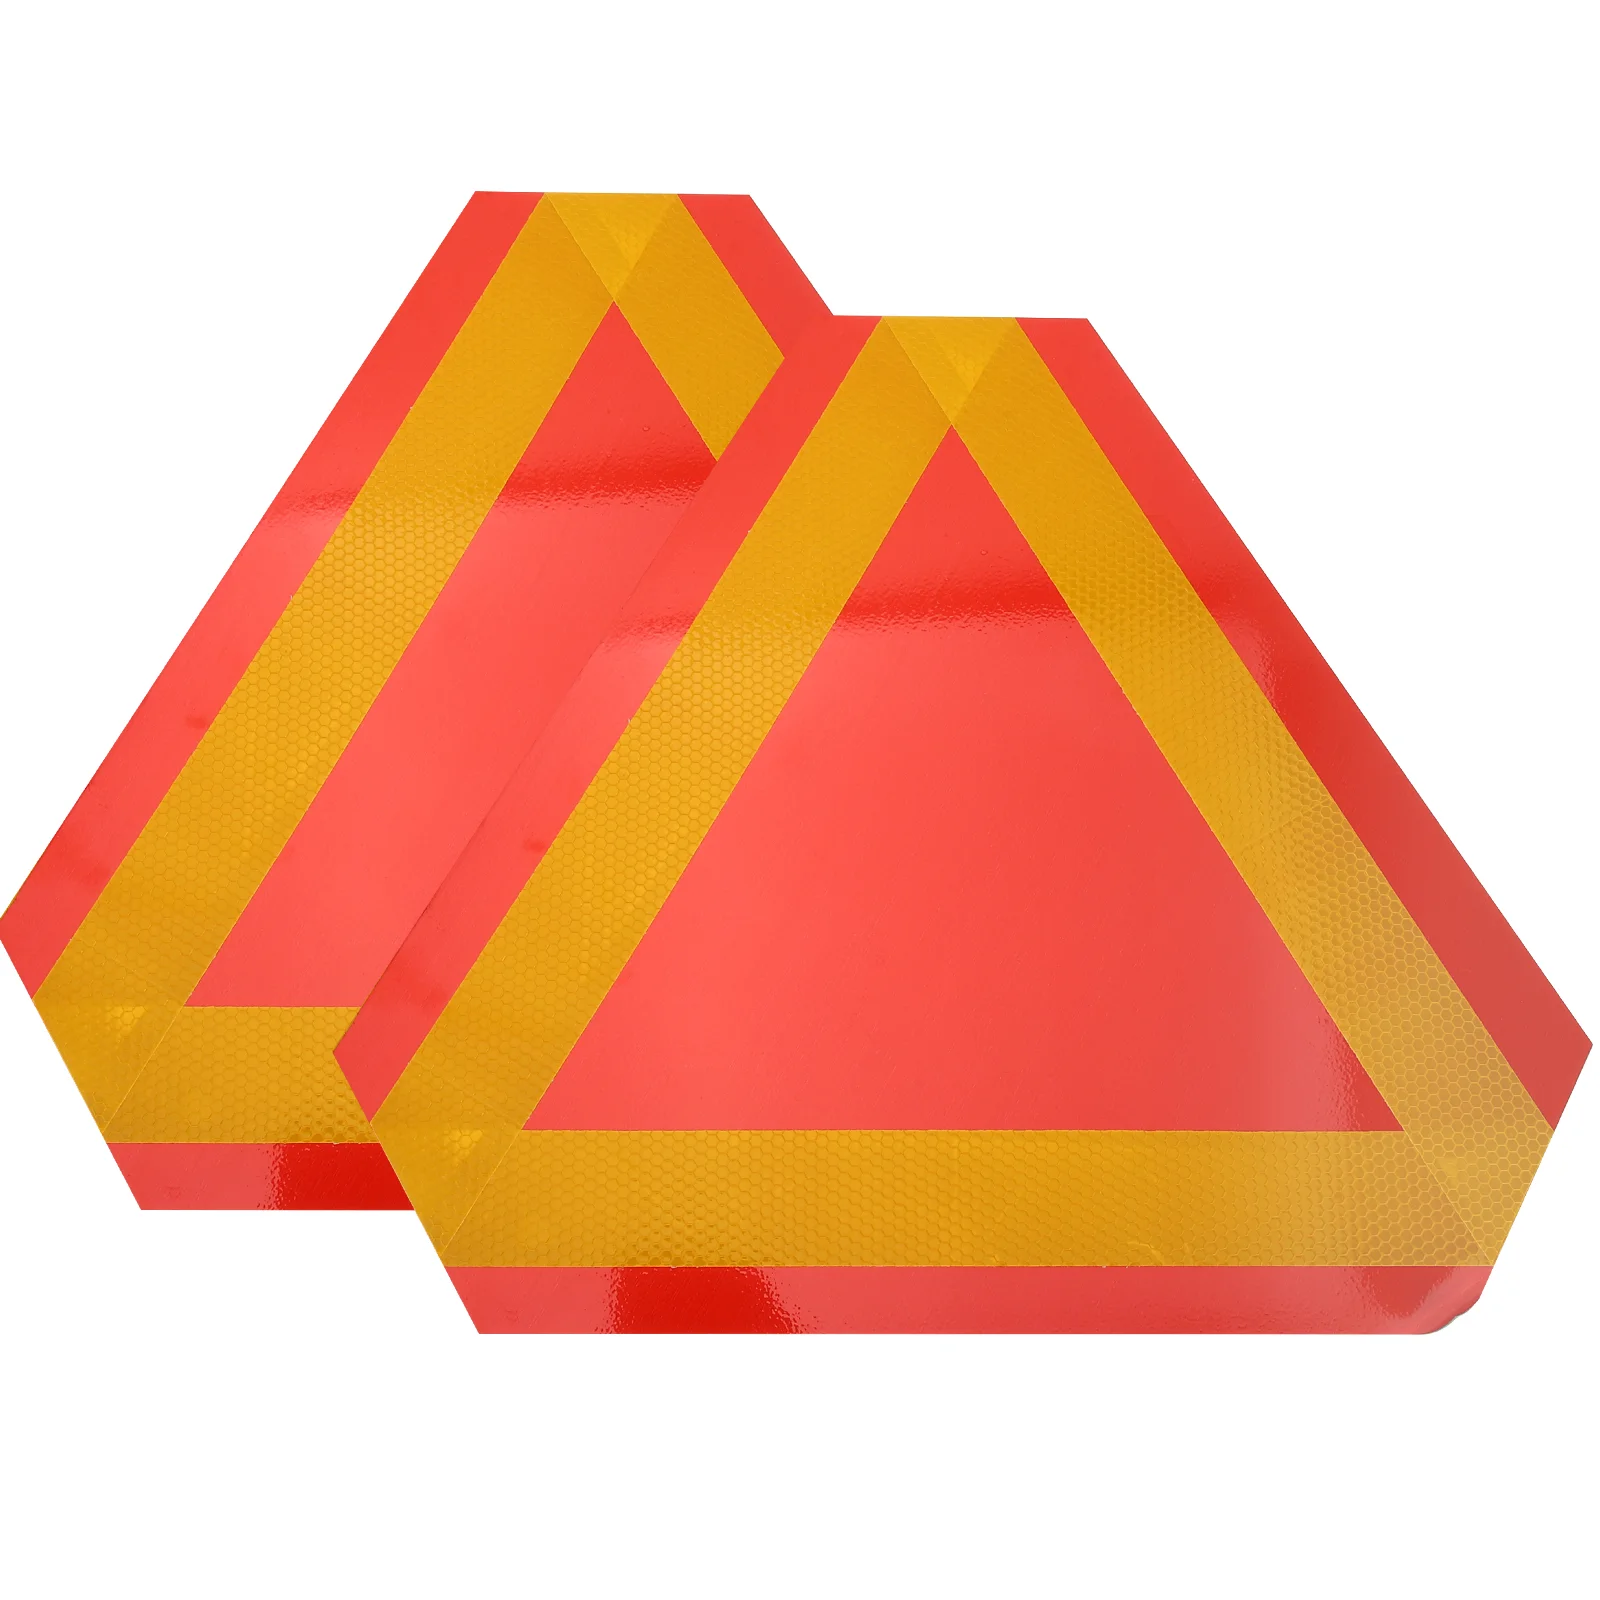 

2 Pcs Triangular Reflector Car Flag Slow Moving Vehicle Triangle Sign Reflectors Warning The